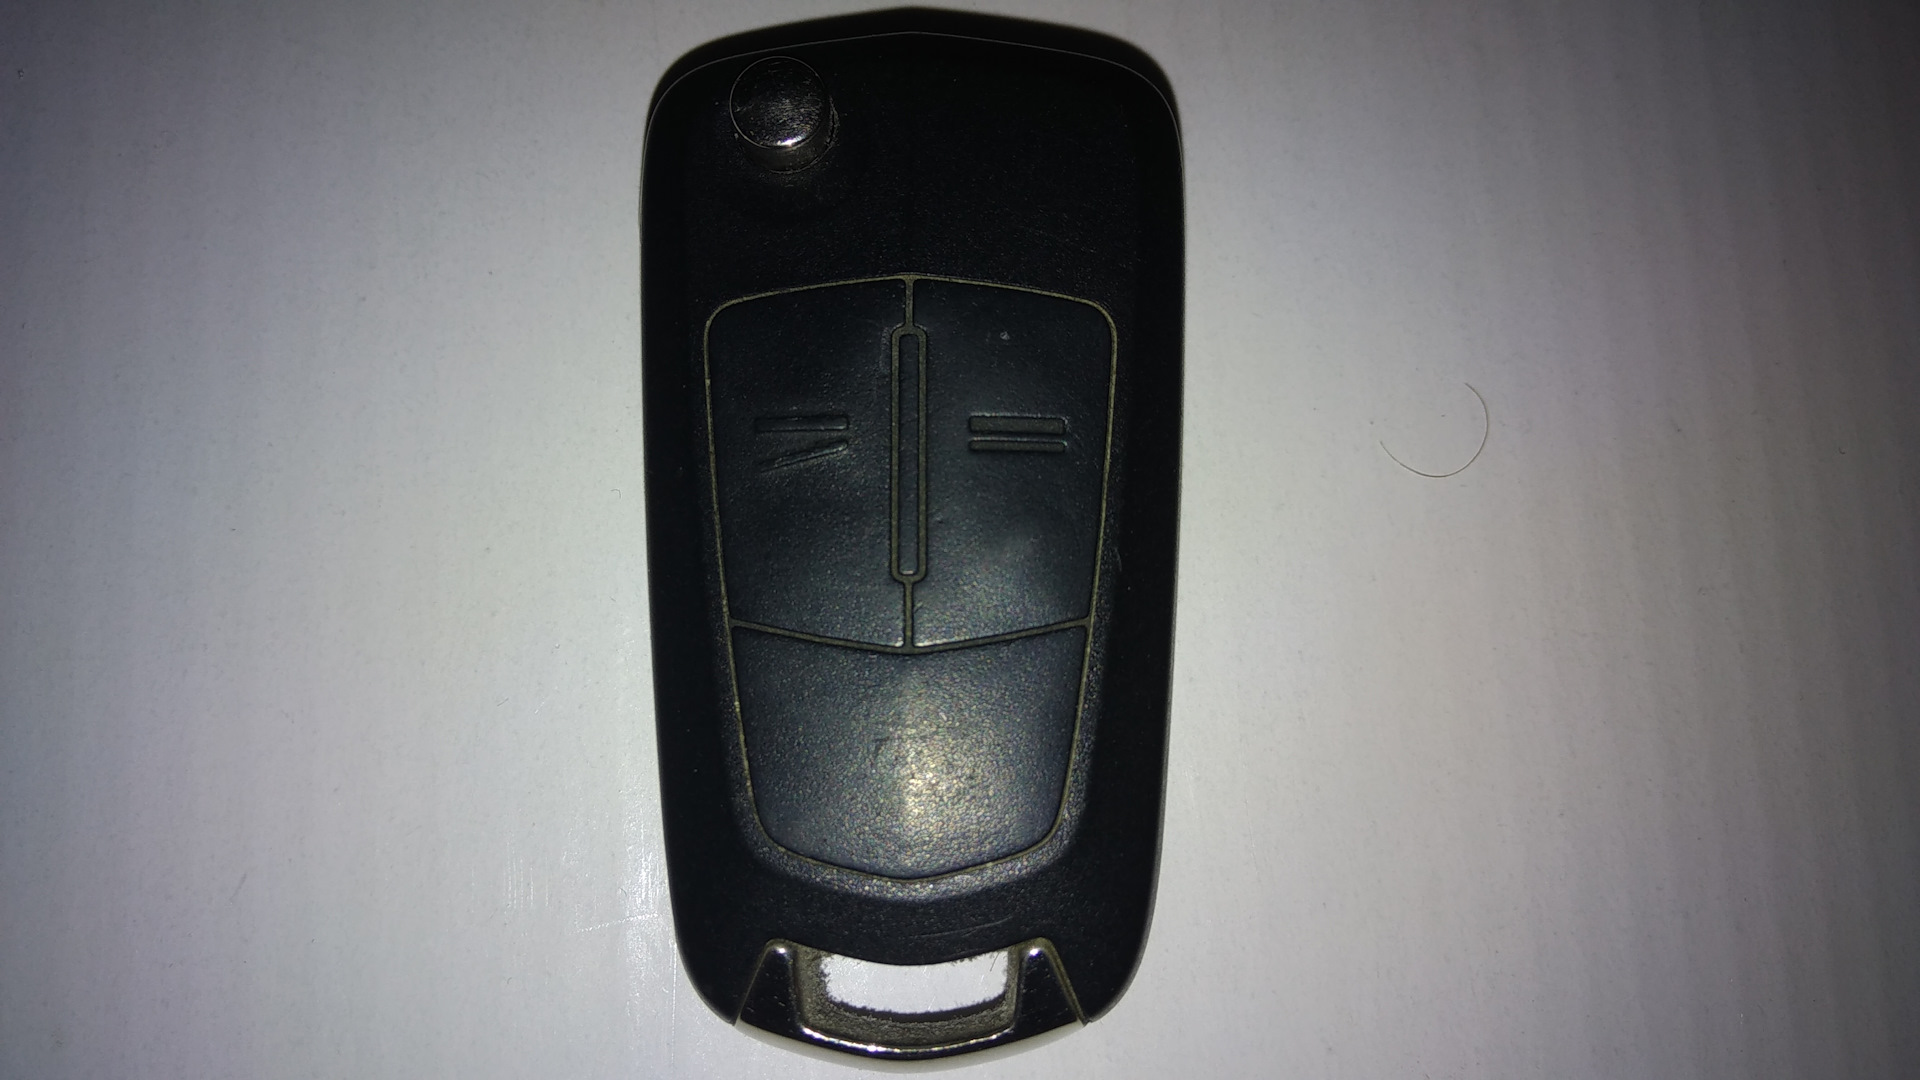 Ключ опель зафира б. Ключ Opel Zafira b. Батарейка ключа Opel Zafira. Ключ Opel Zafira. Батарейка ключа Опель Зафира 2004.